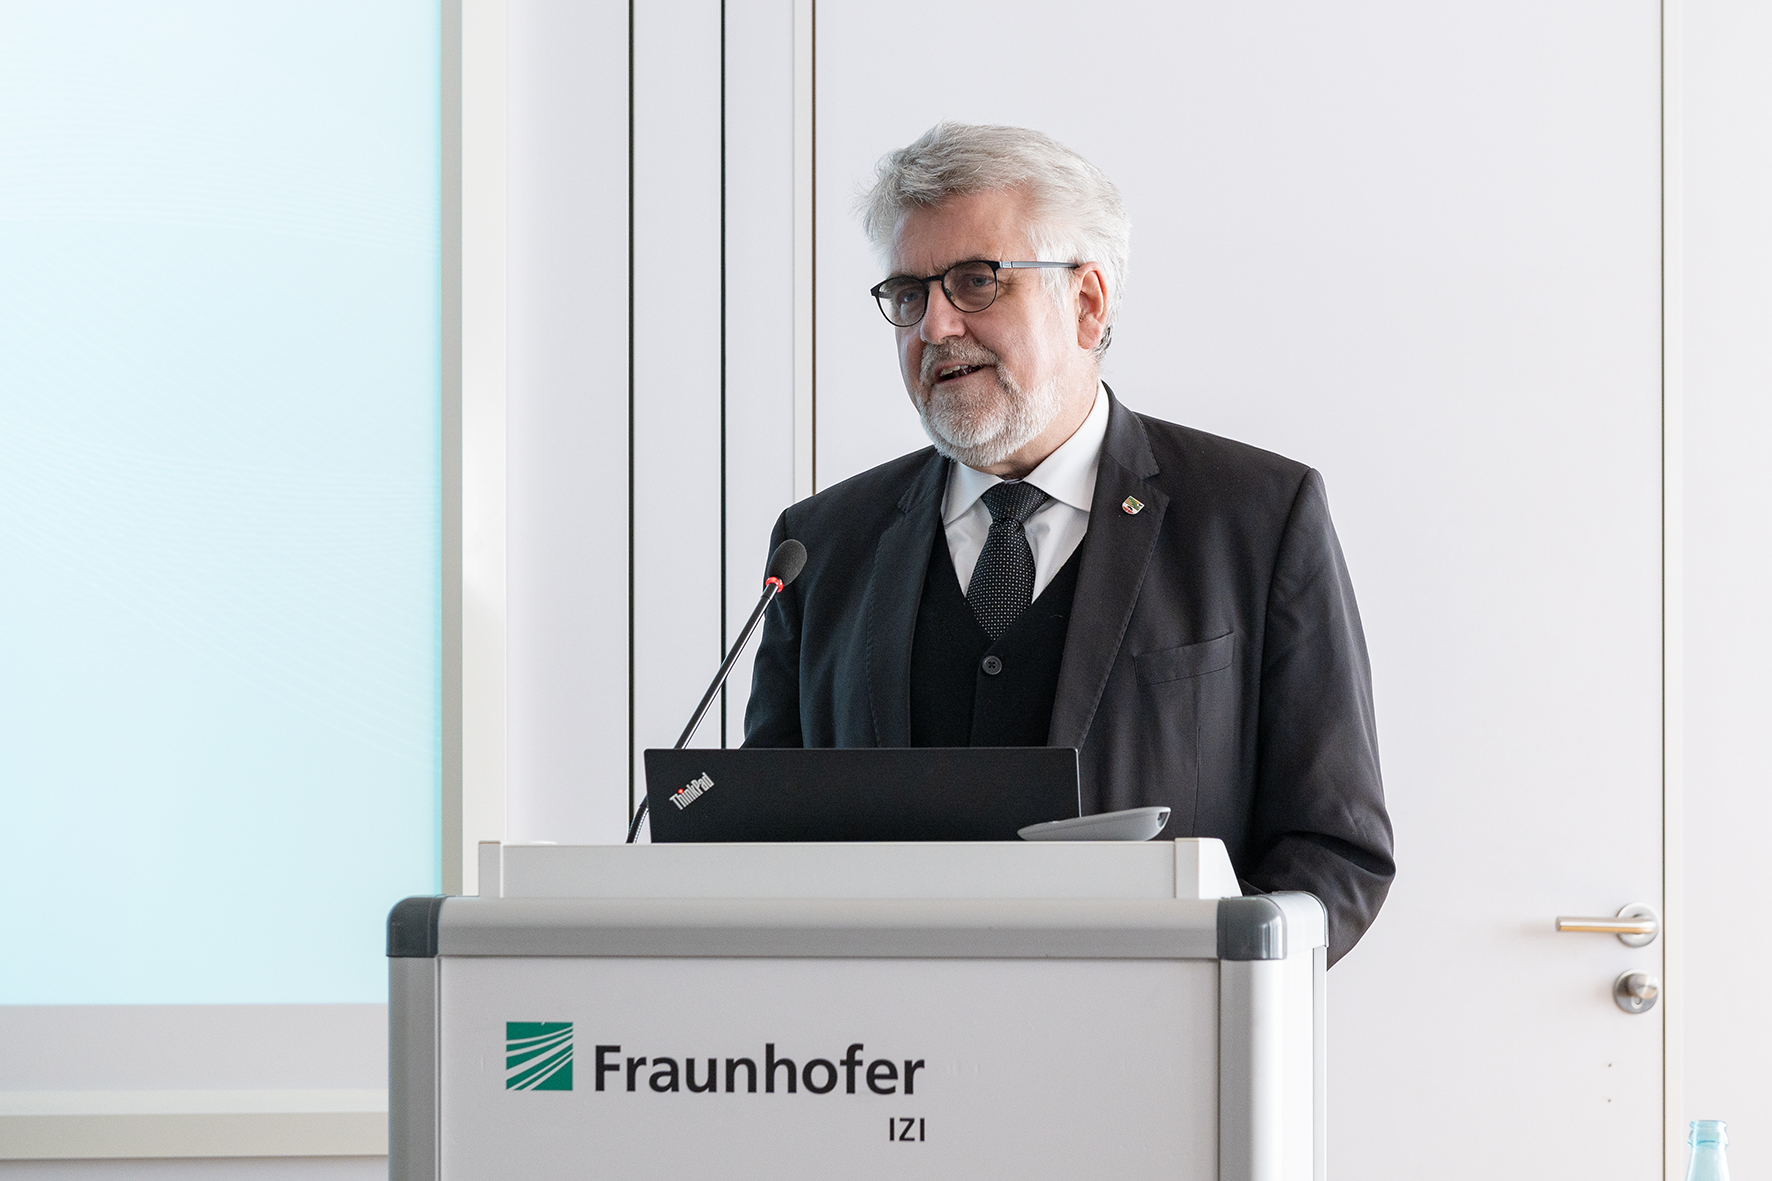 Saxony-Anhalt Economics Minister behind lectern